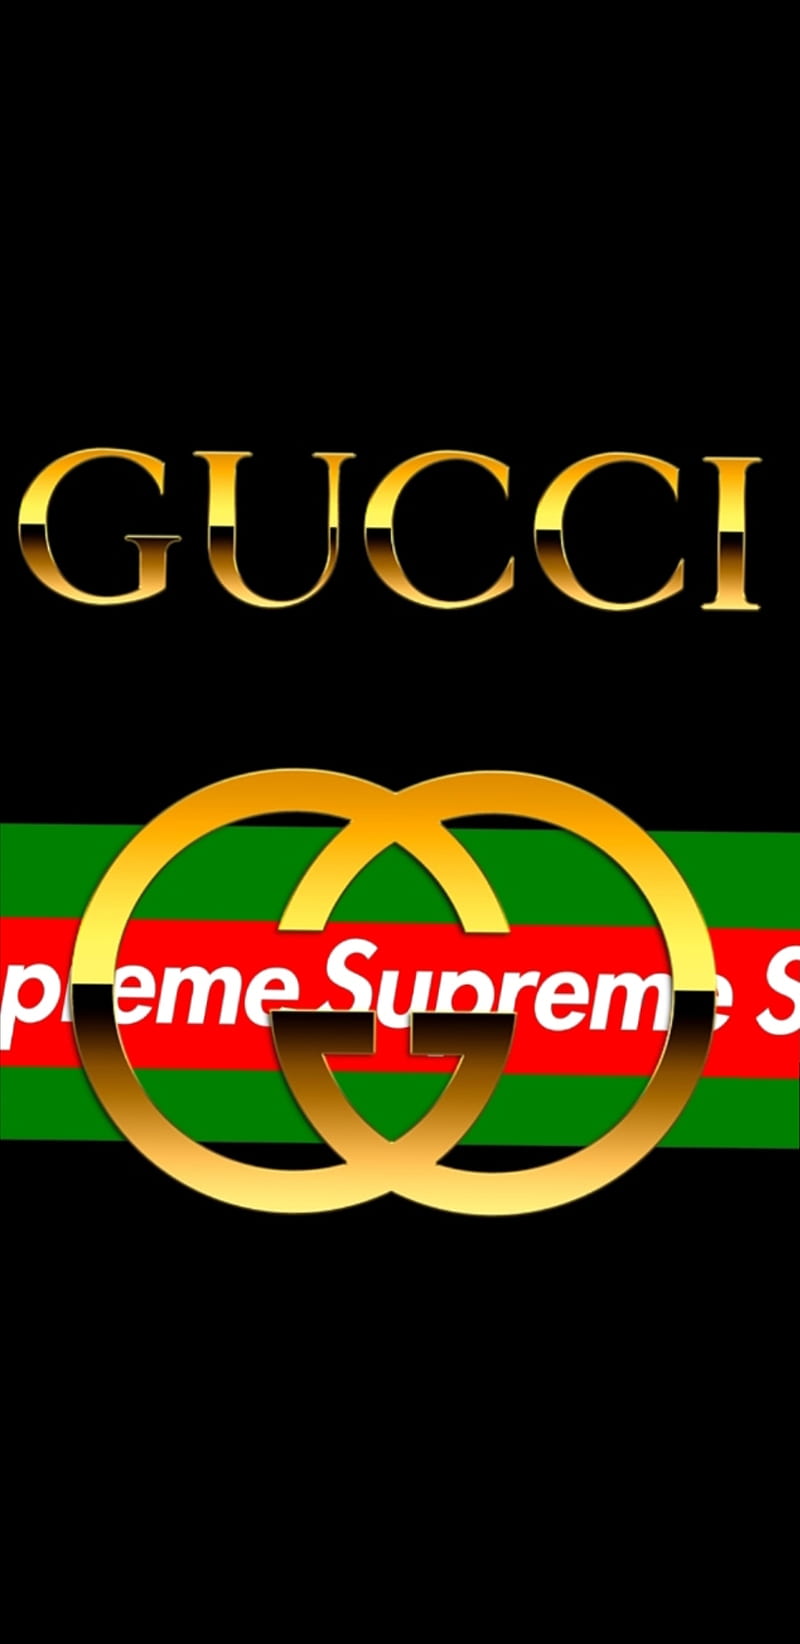 iphone wallpaper on Twitter Gucci x supreme wallpaper gucci supreme  wallpaper iPhoneWallpaper httpstcohtkLTJz1mx  Twitter